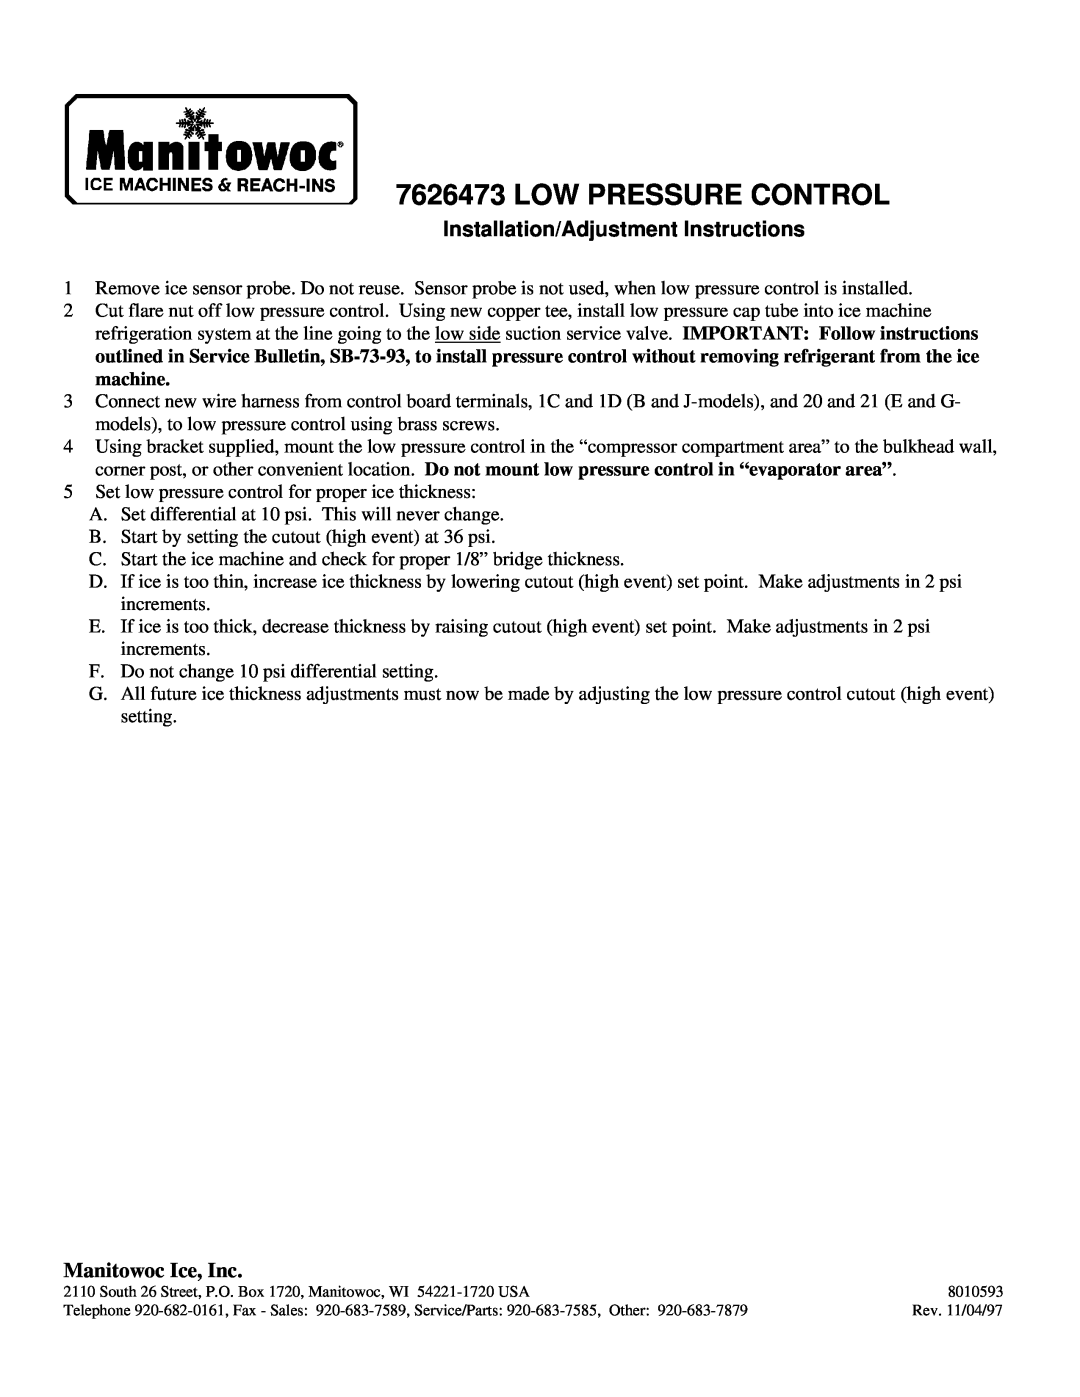 Manitowoc Ice 7626473 manual Low Pressure Control, Installation/Adjustment Instructions, Manitowoc Ice, Inc 